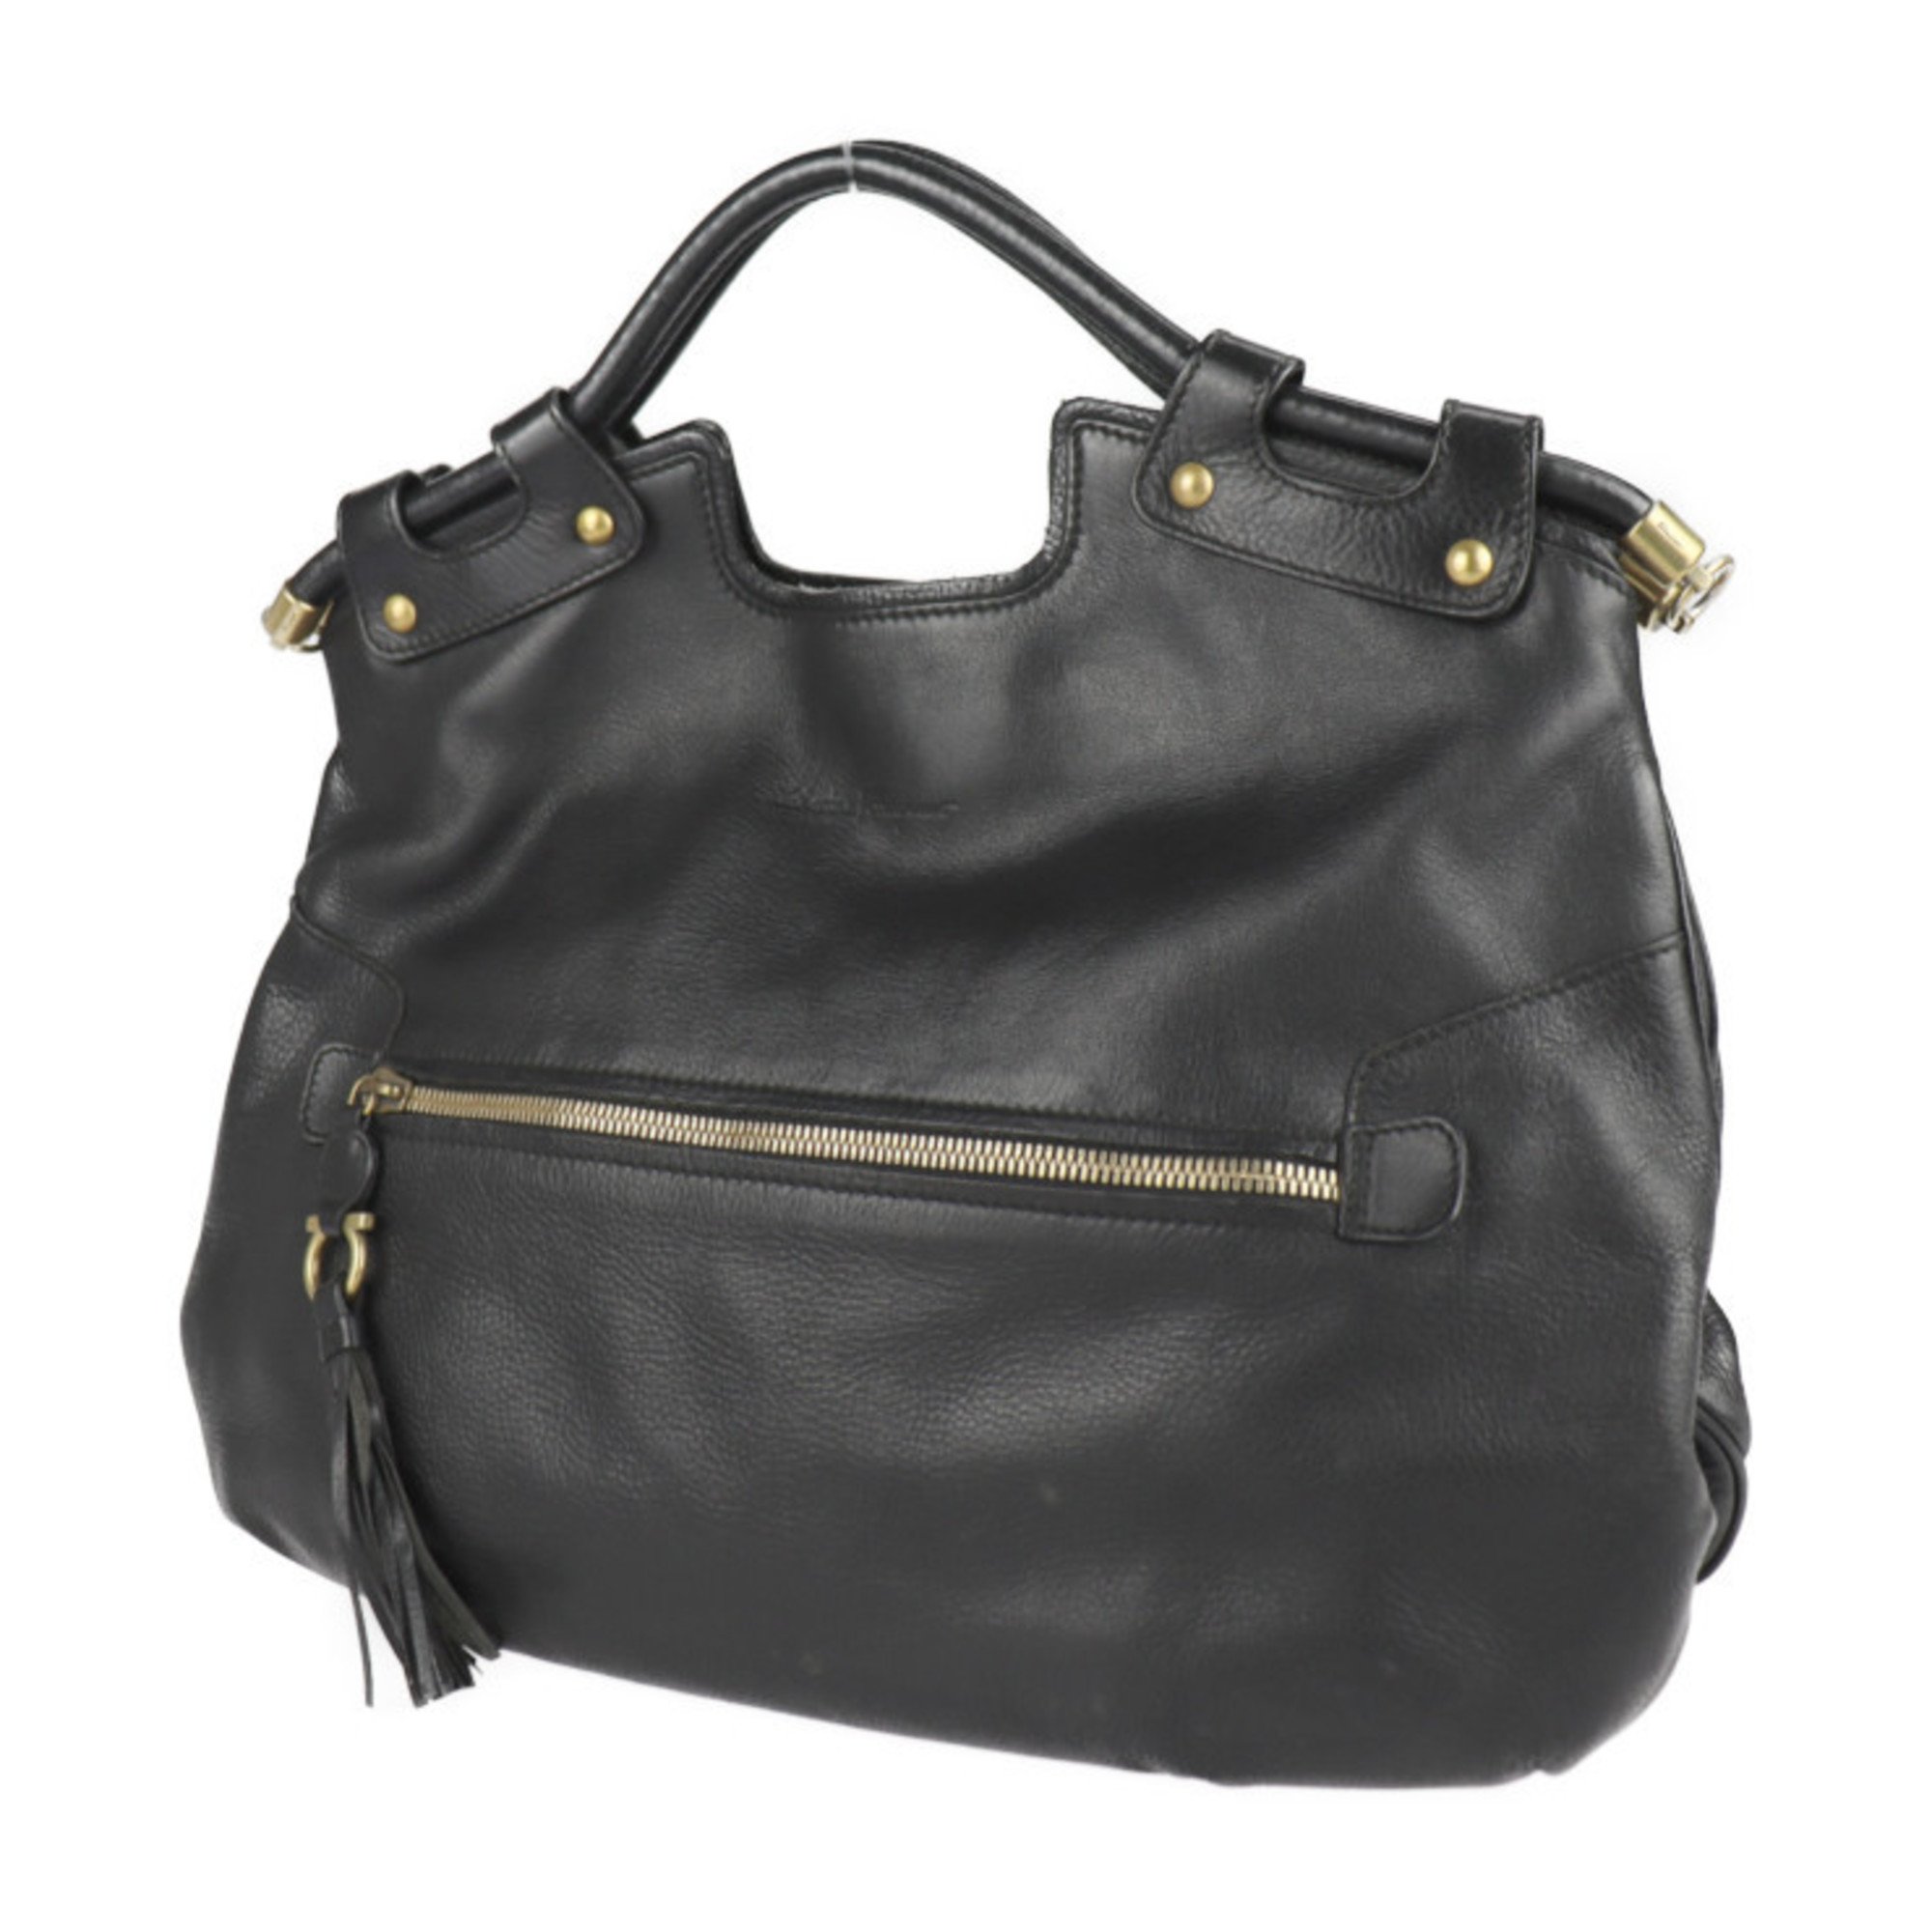 Salvatore Ferragamo handbag 21 6829 leather black gold metal fittings 2WAY shoulder bag tassel